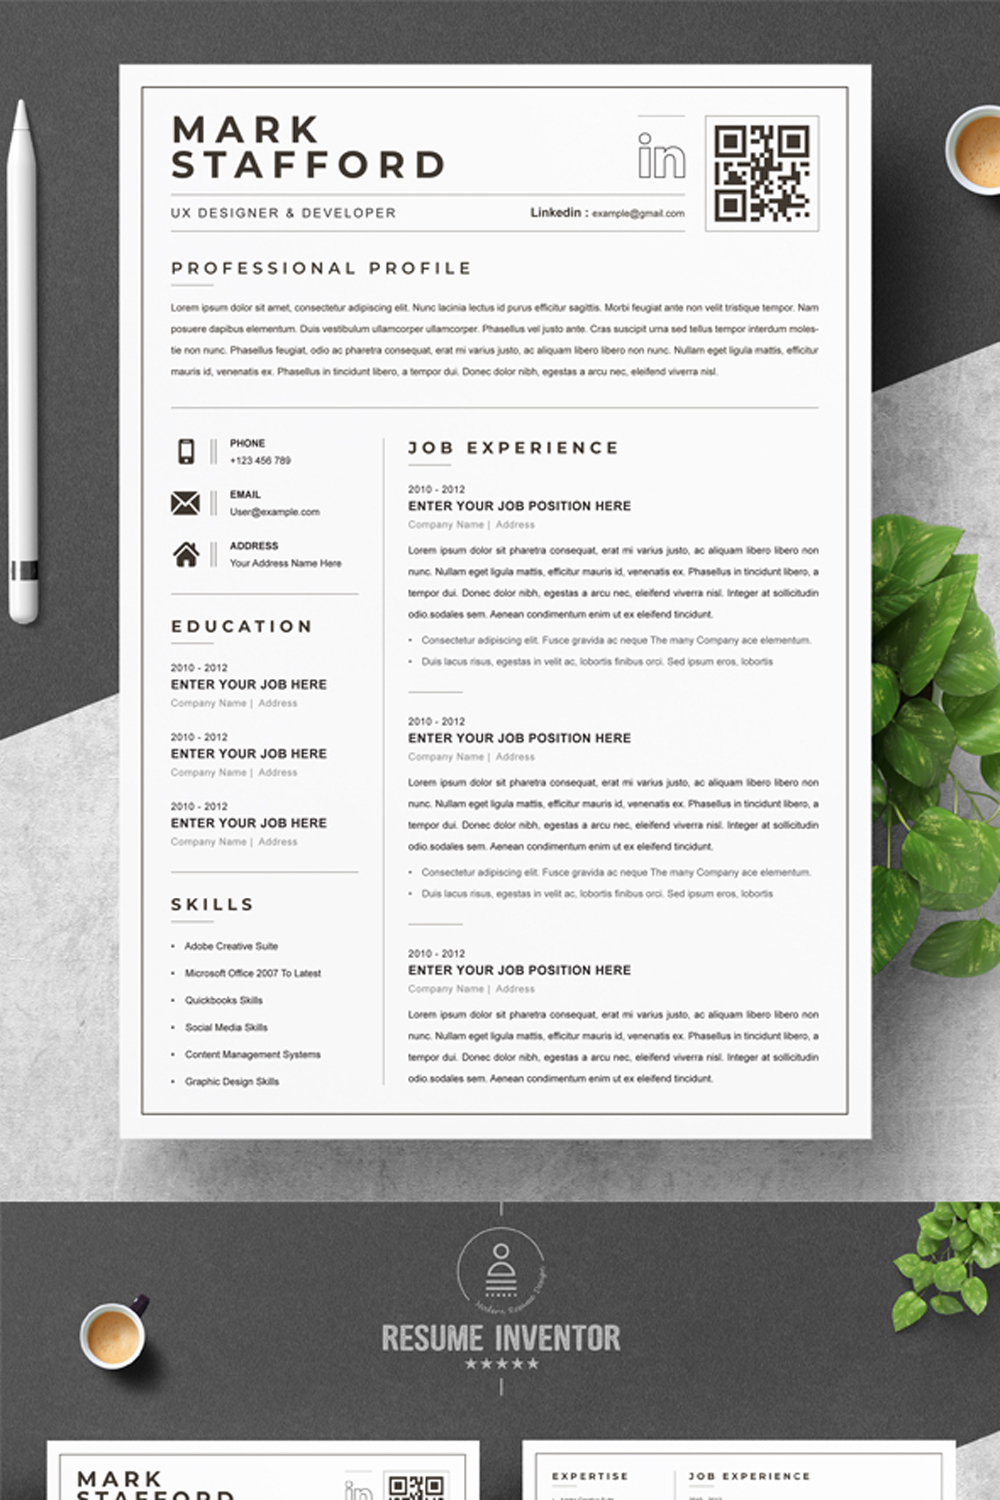 UX Designer & Developer Resume Template | Clean Resume Template pinterest preview image.